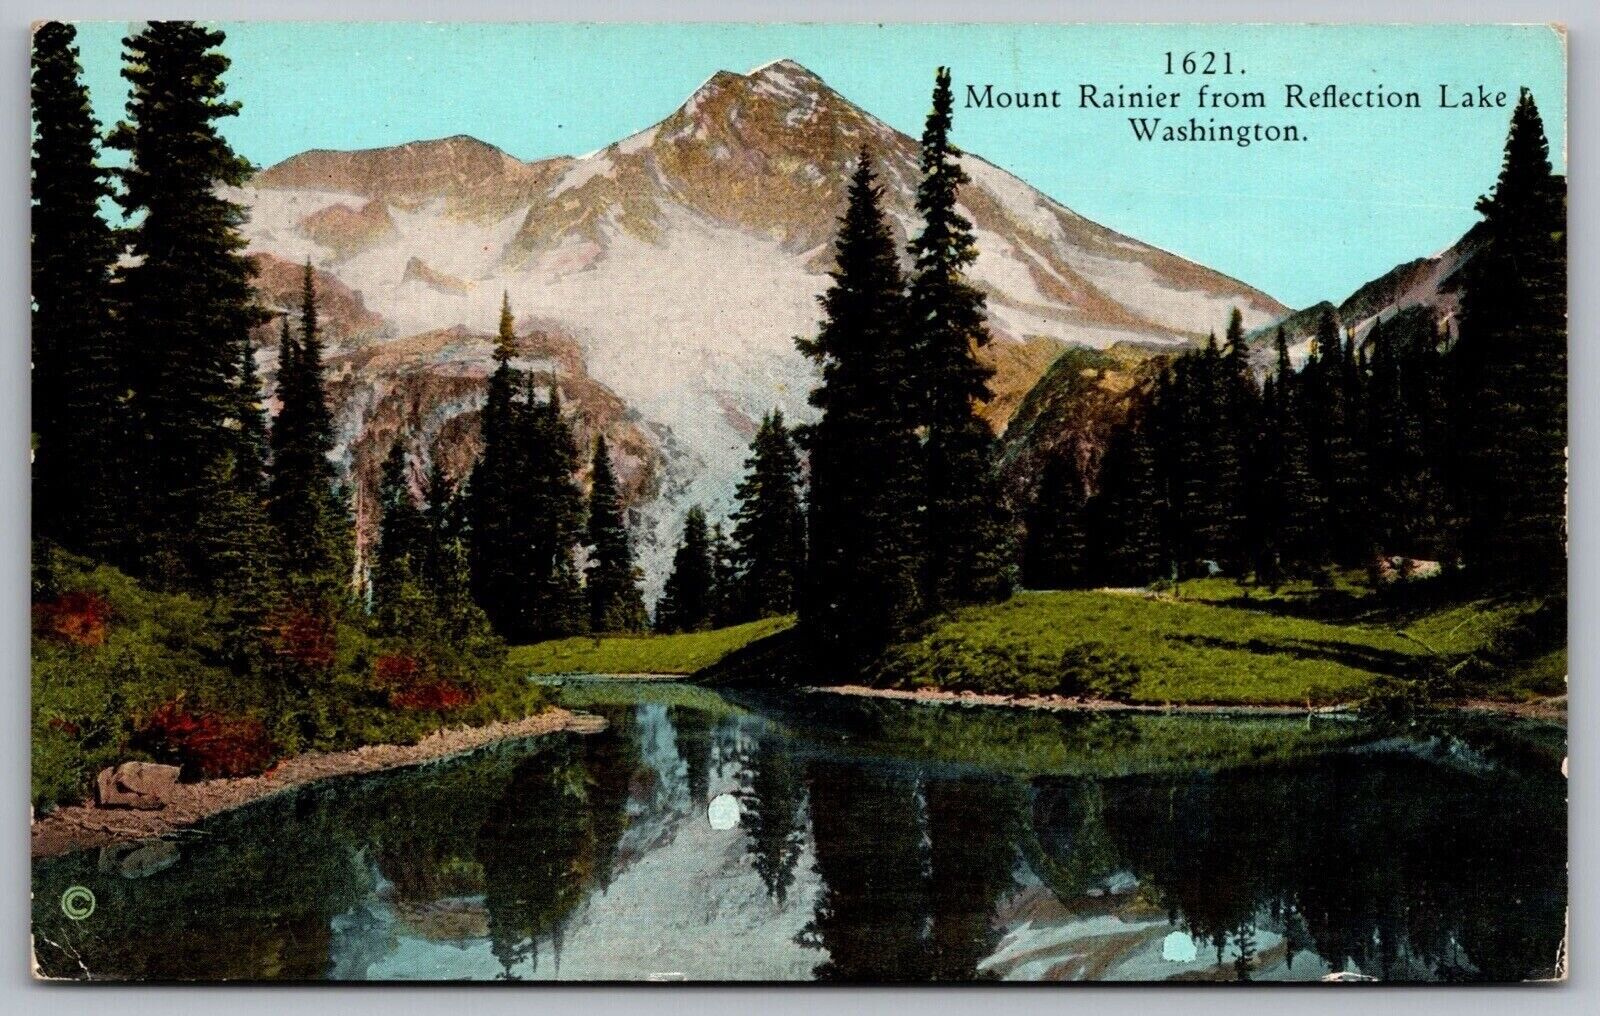 Mount Rainier Reflection Lake Washington Reflection Postcard